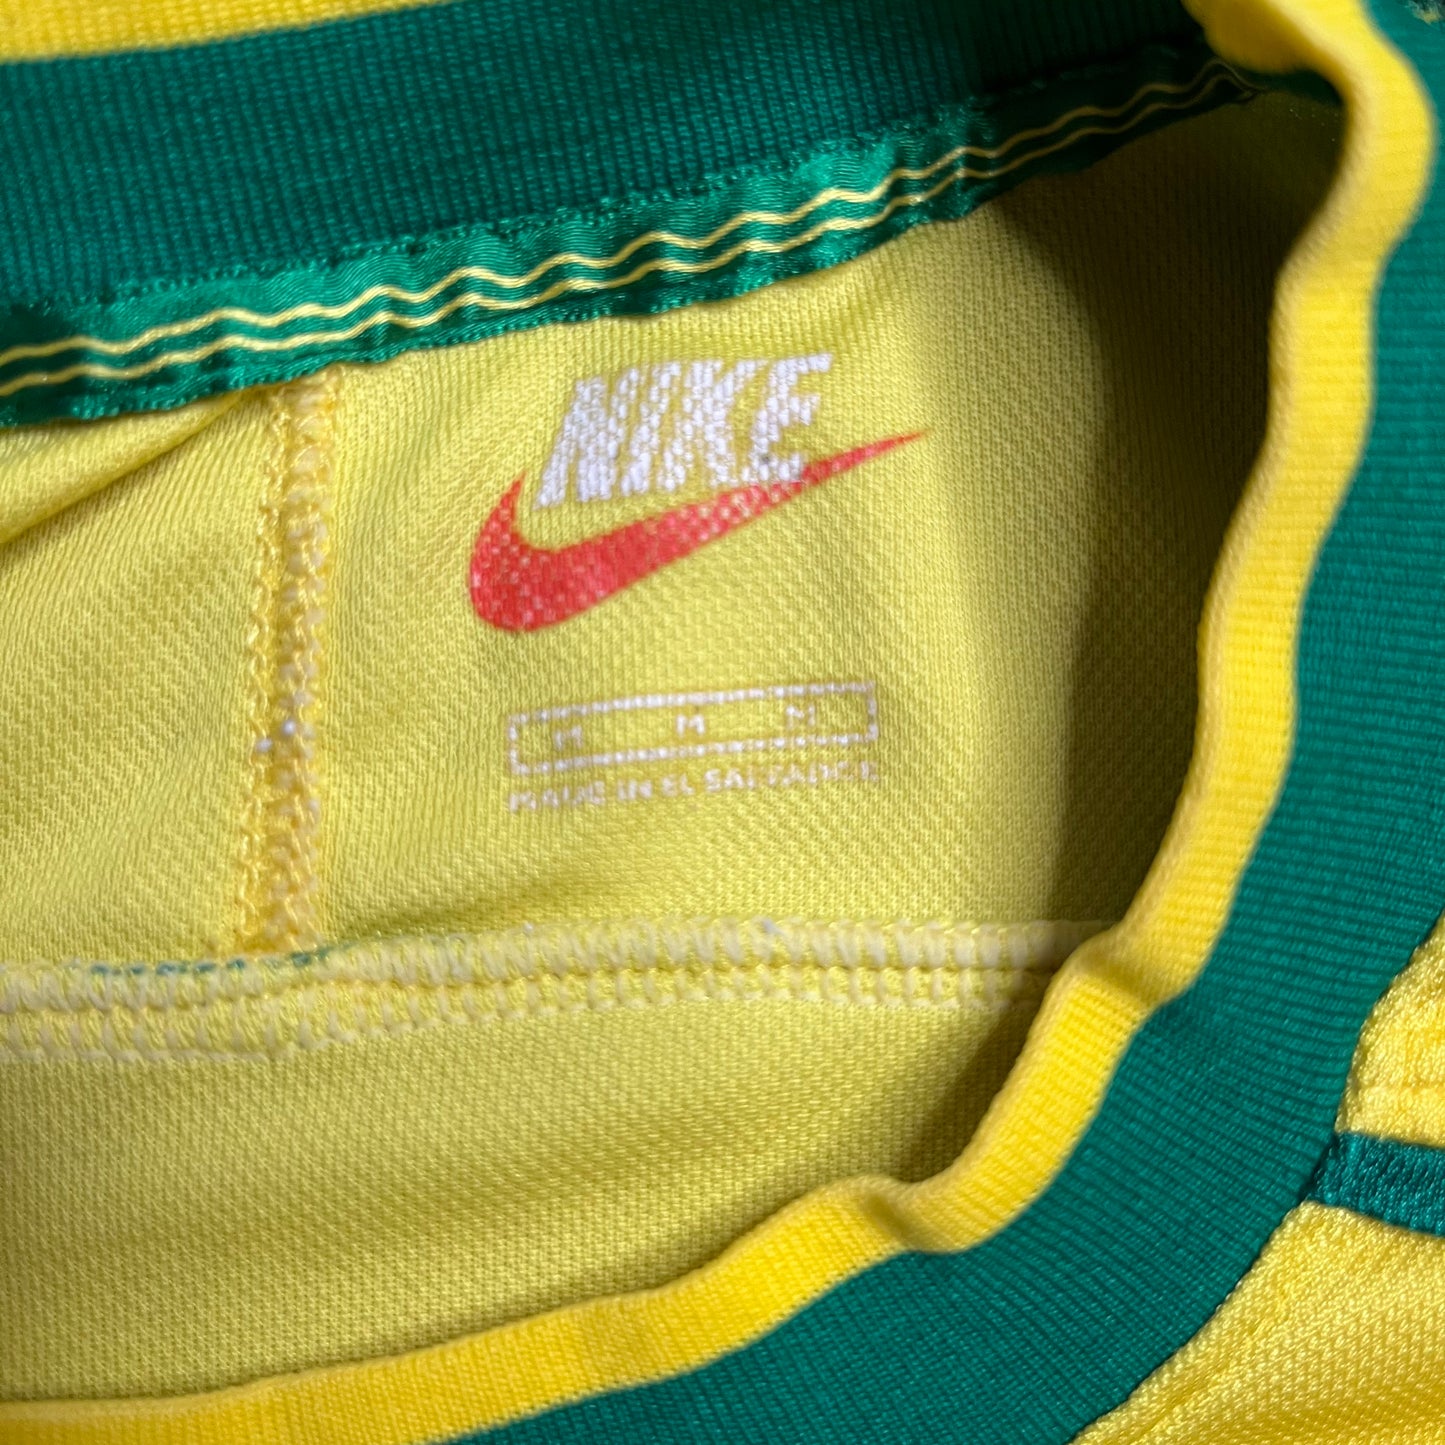 1998 Brazil Nike Tee (M)